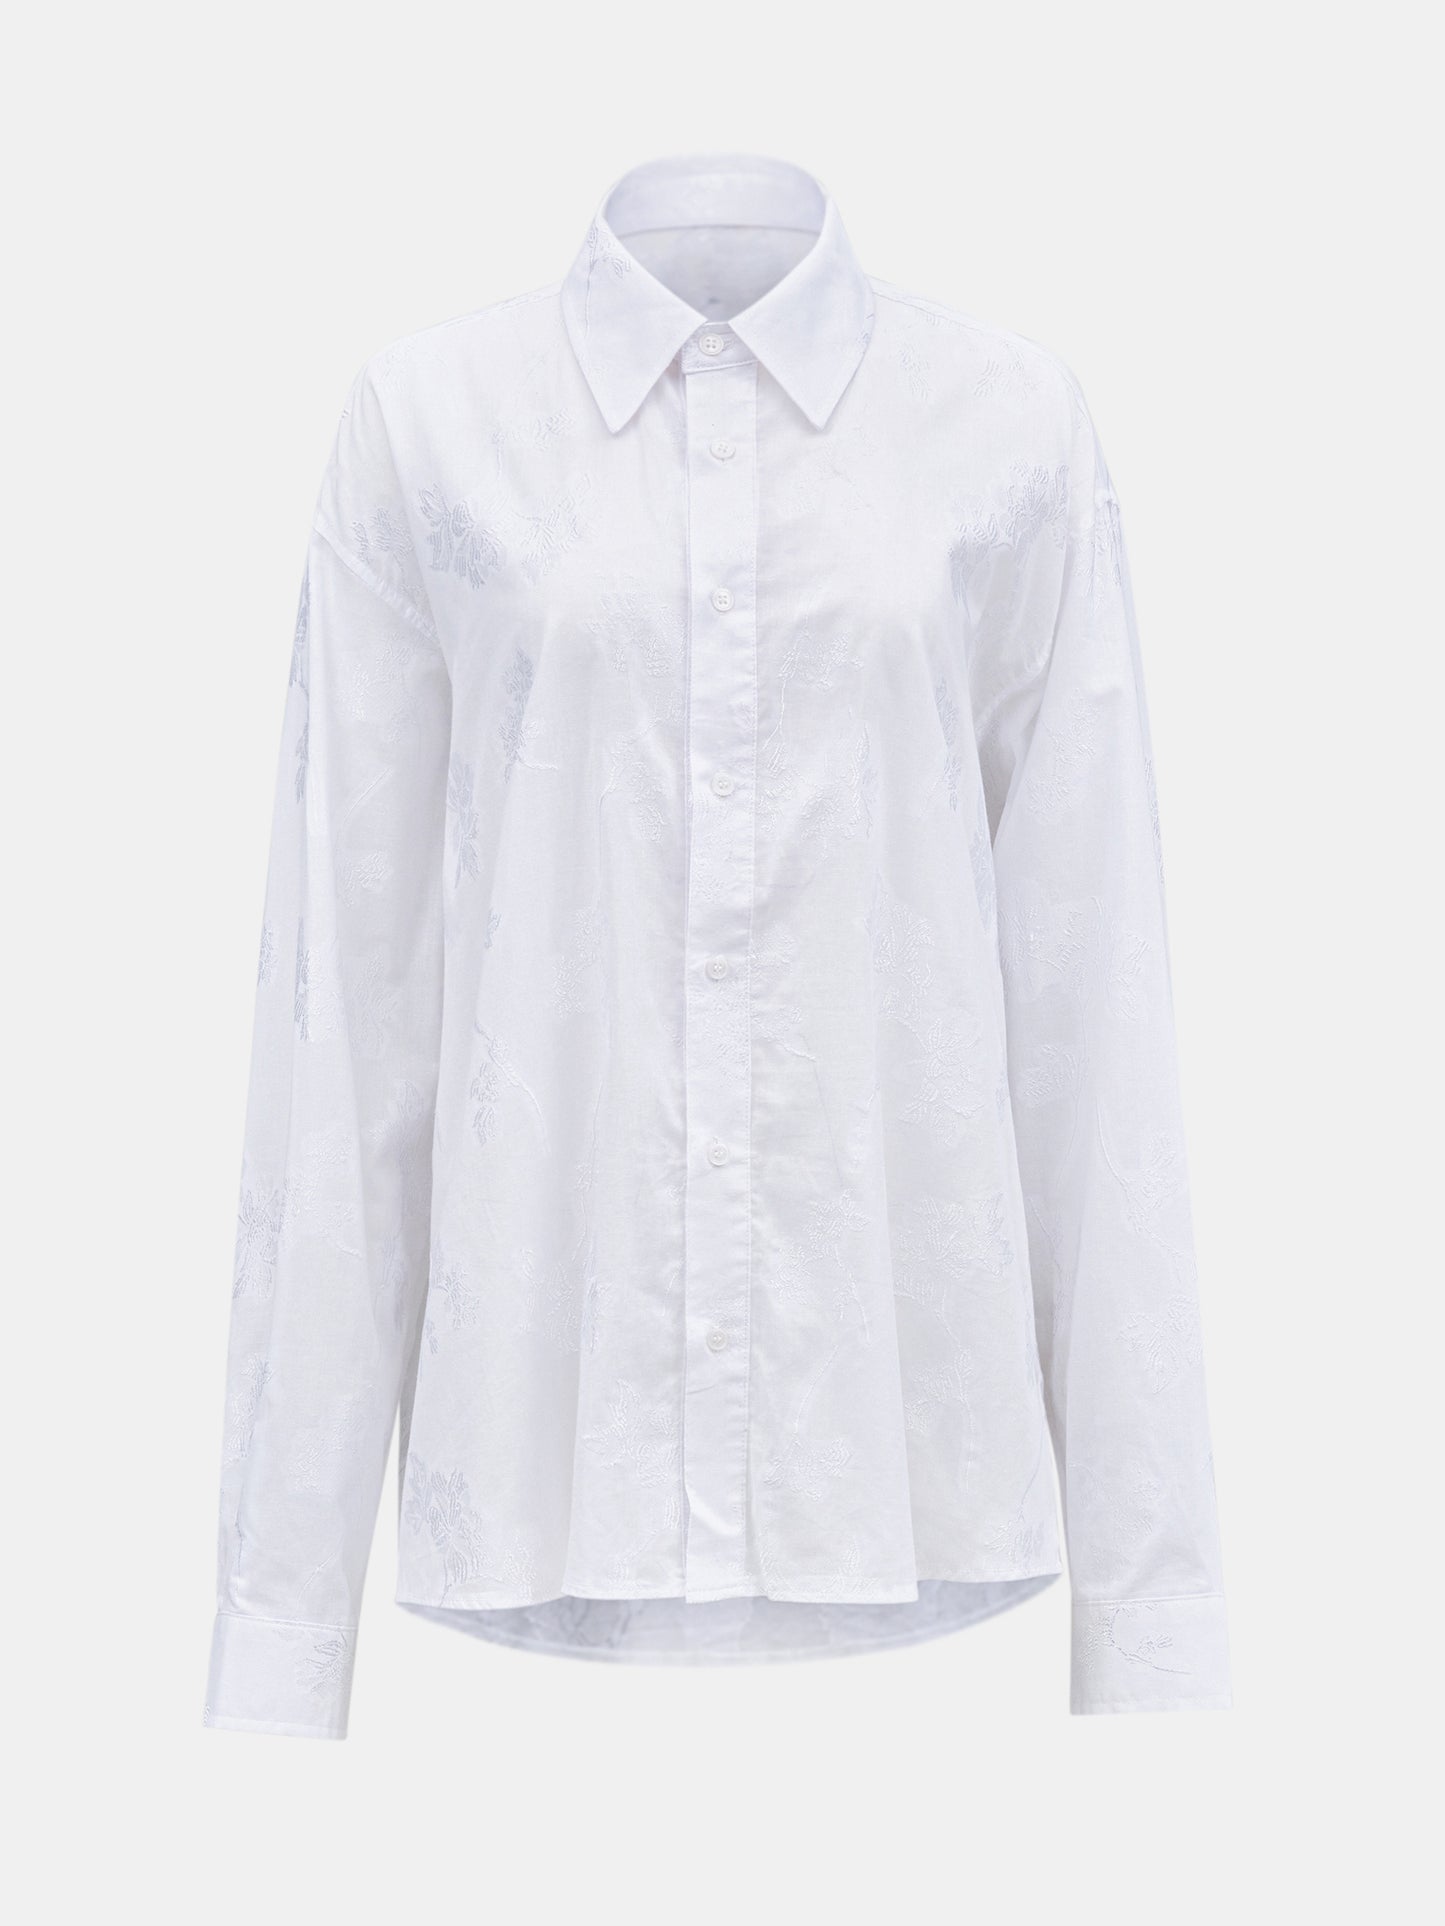 Boyfriend Jacquard Shirt, White